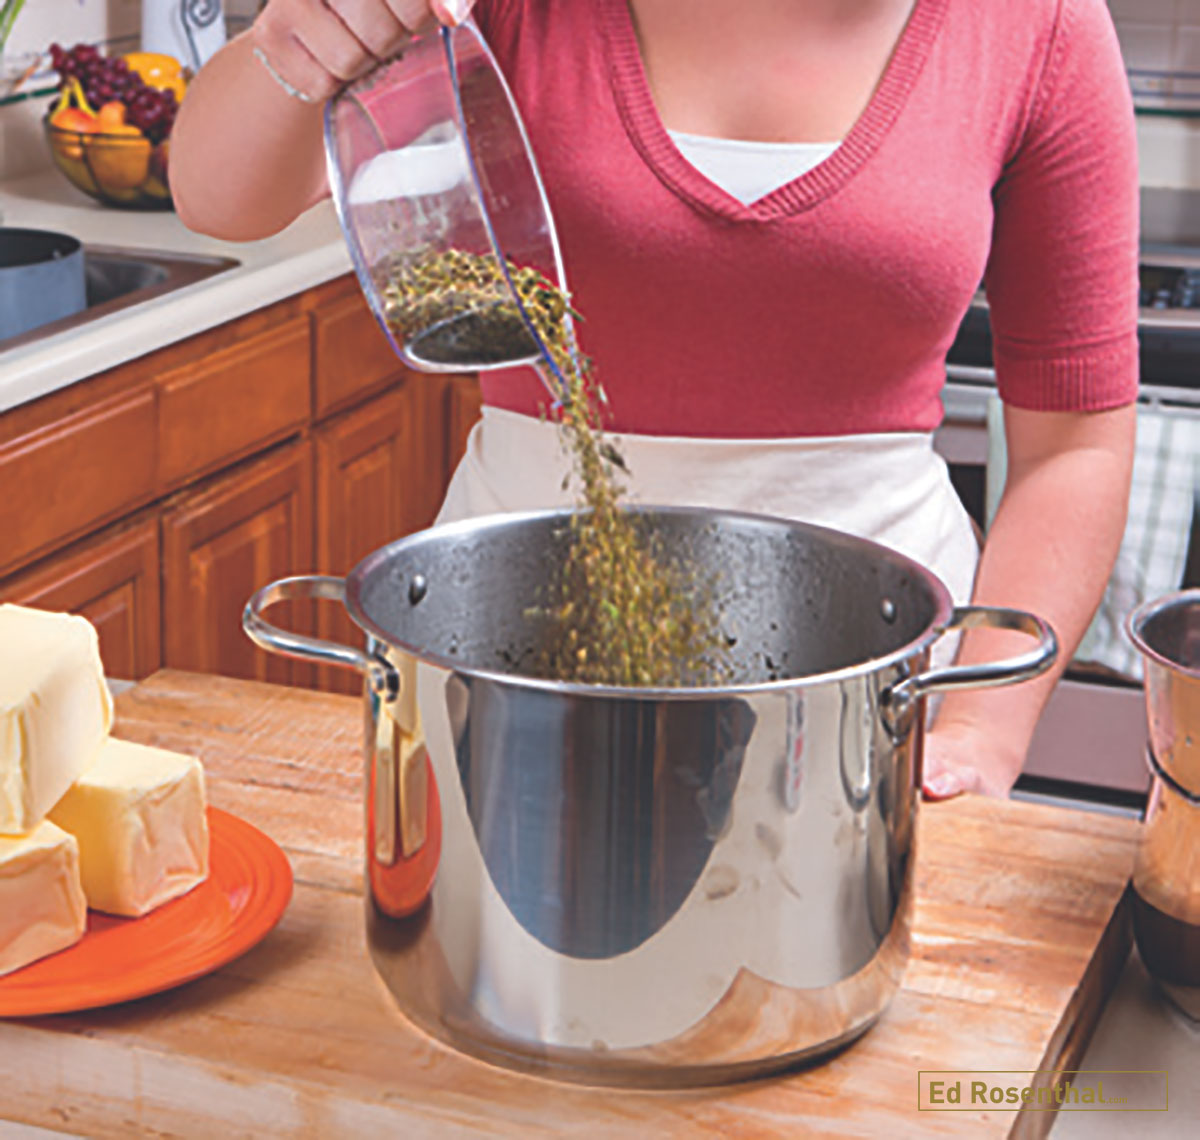 Pouring measured marijuana into cooking pot